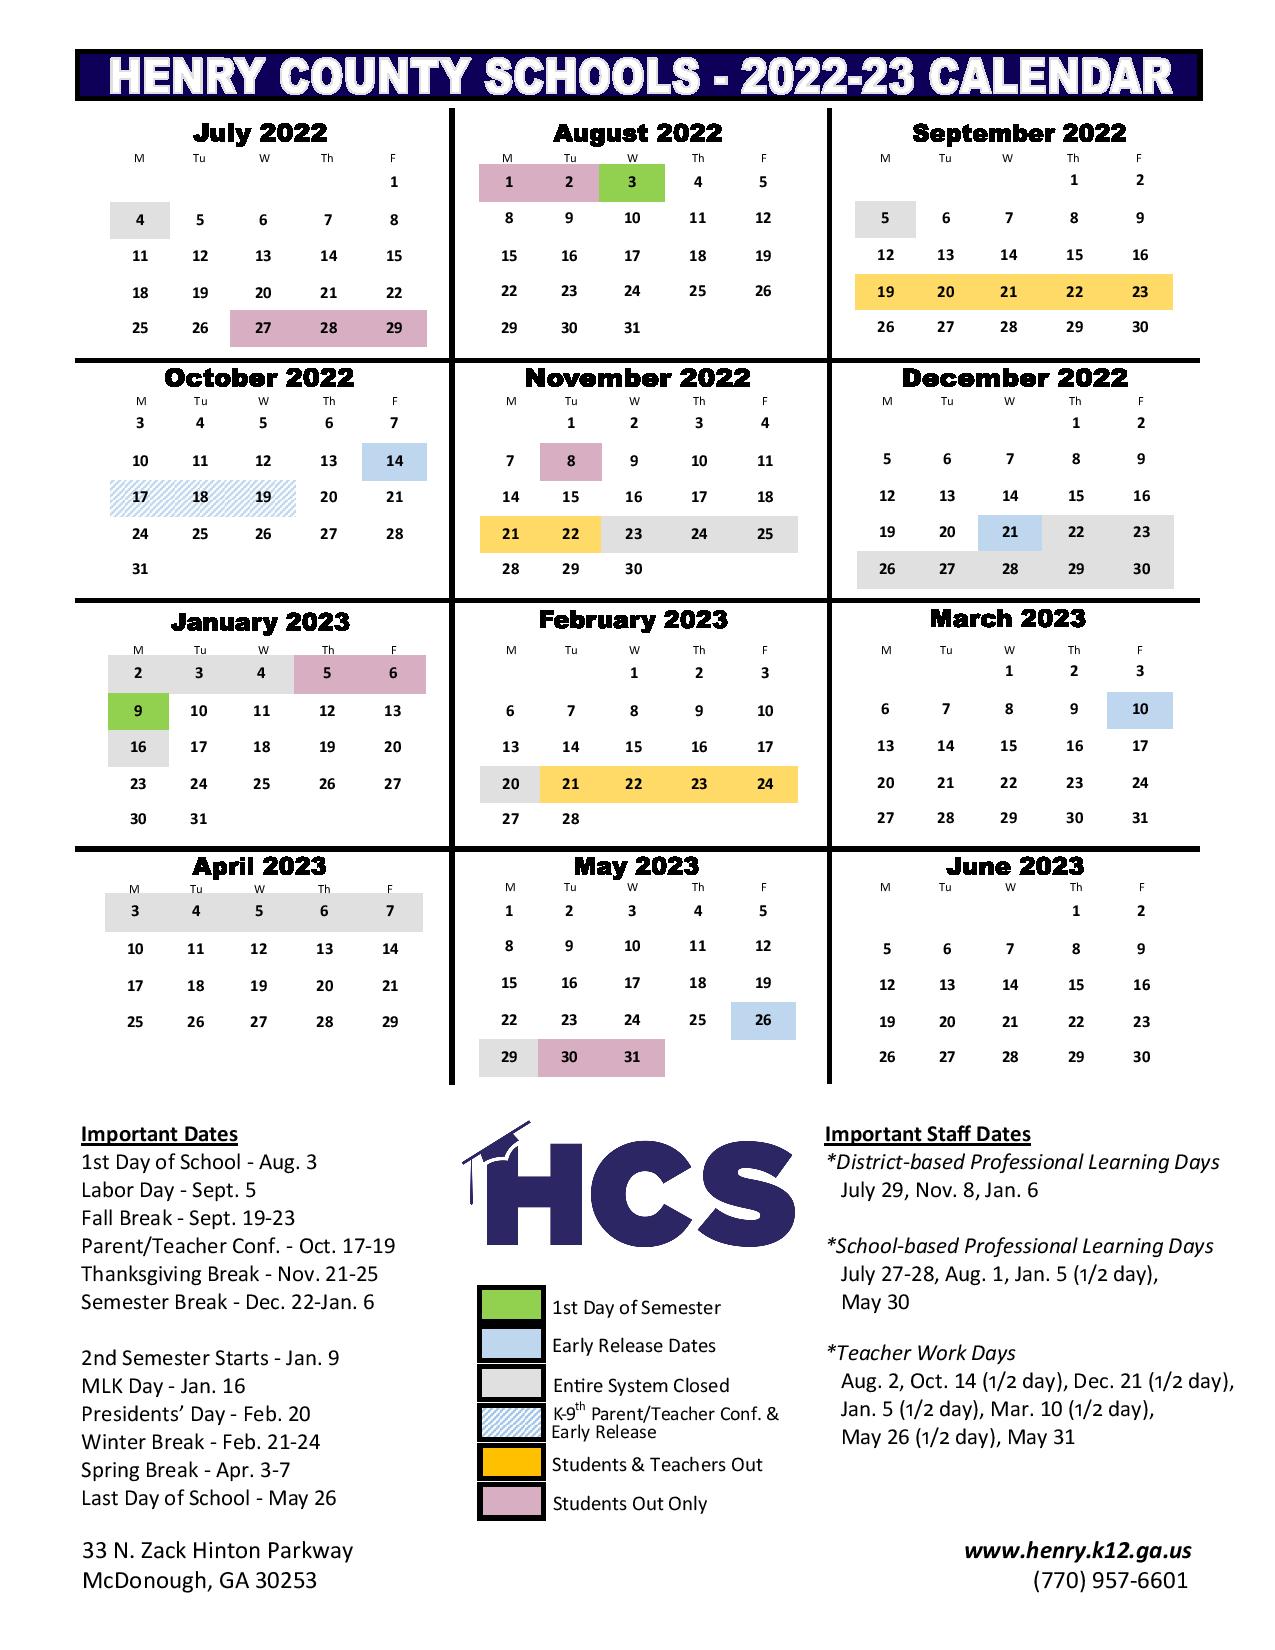 Henry County Schools Calendar 20222023 in PDF